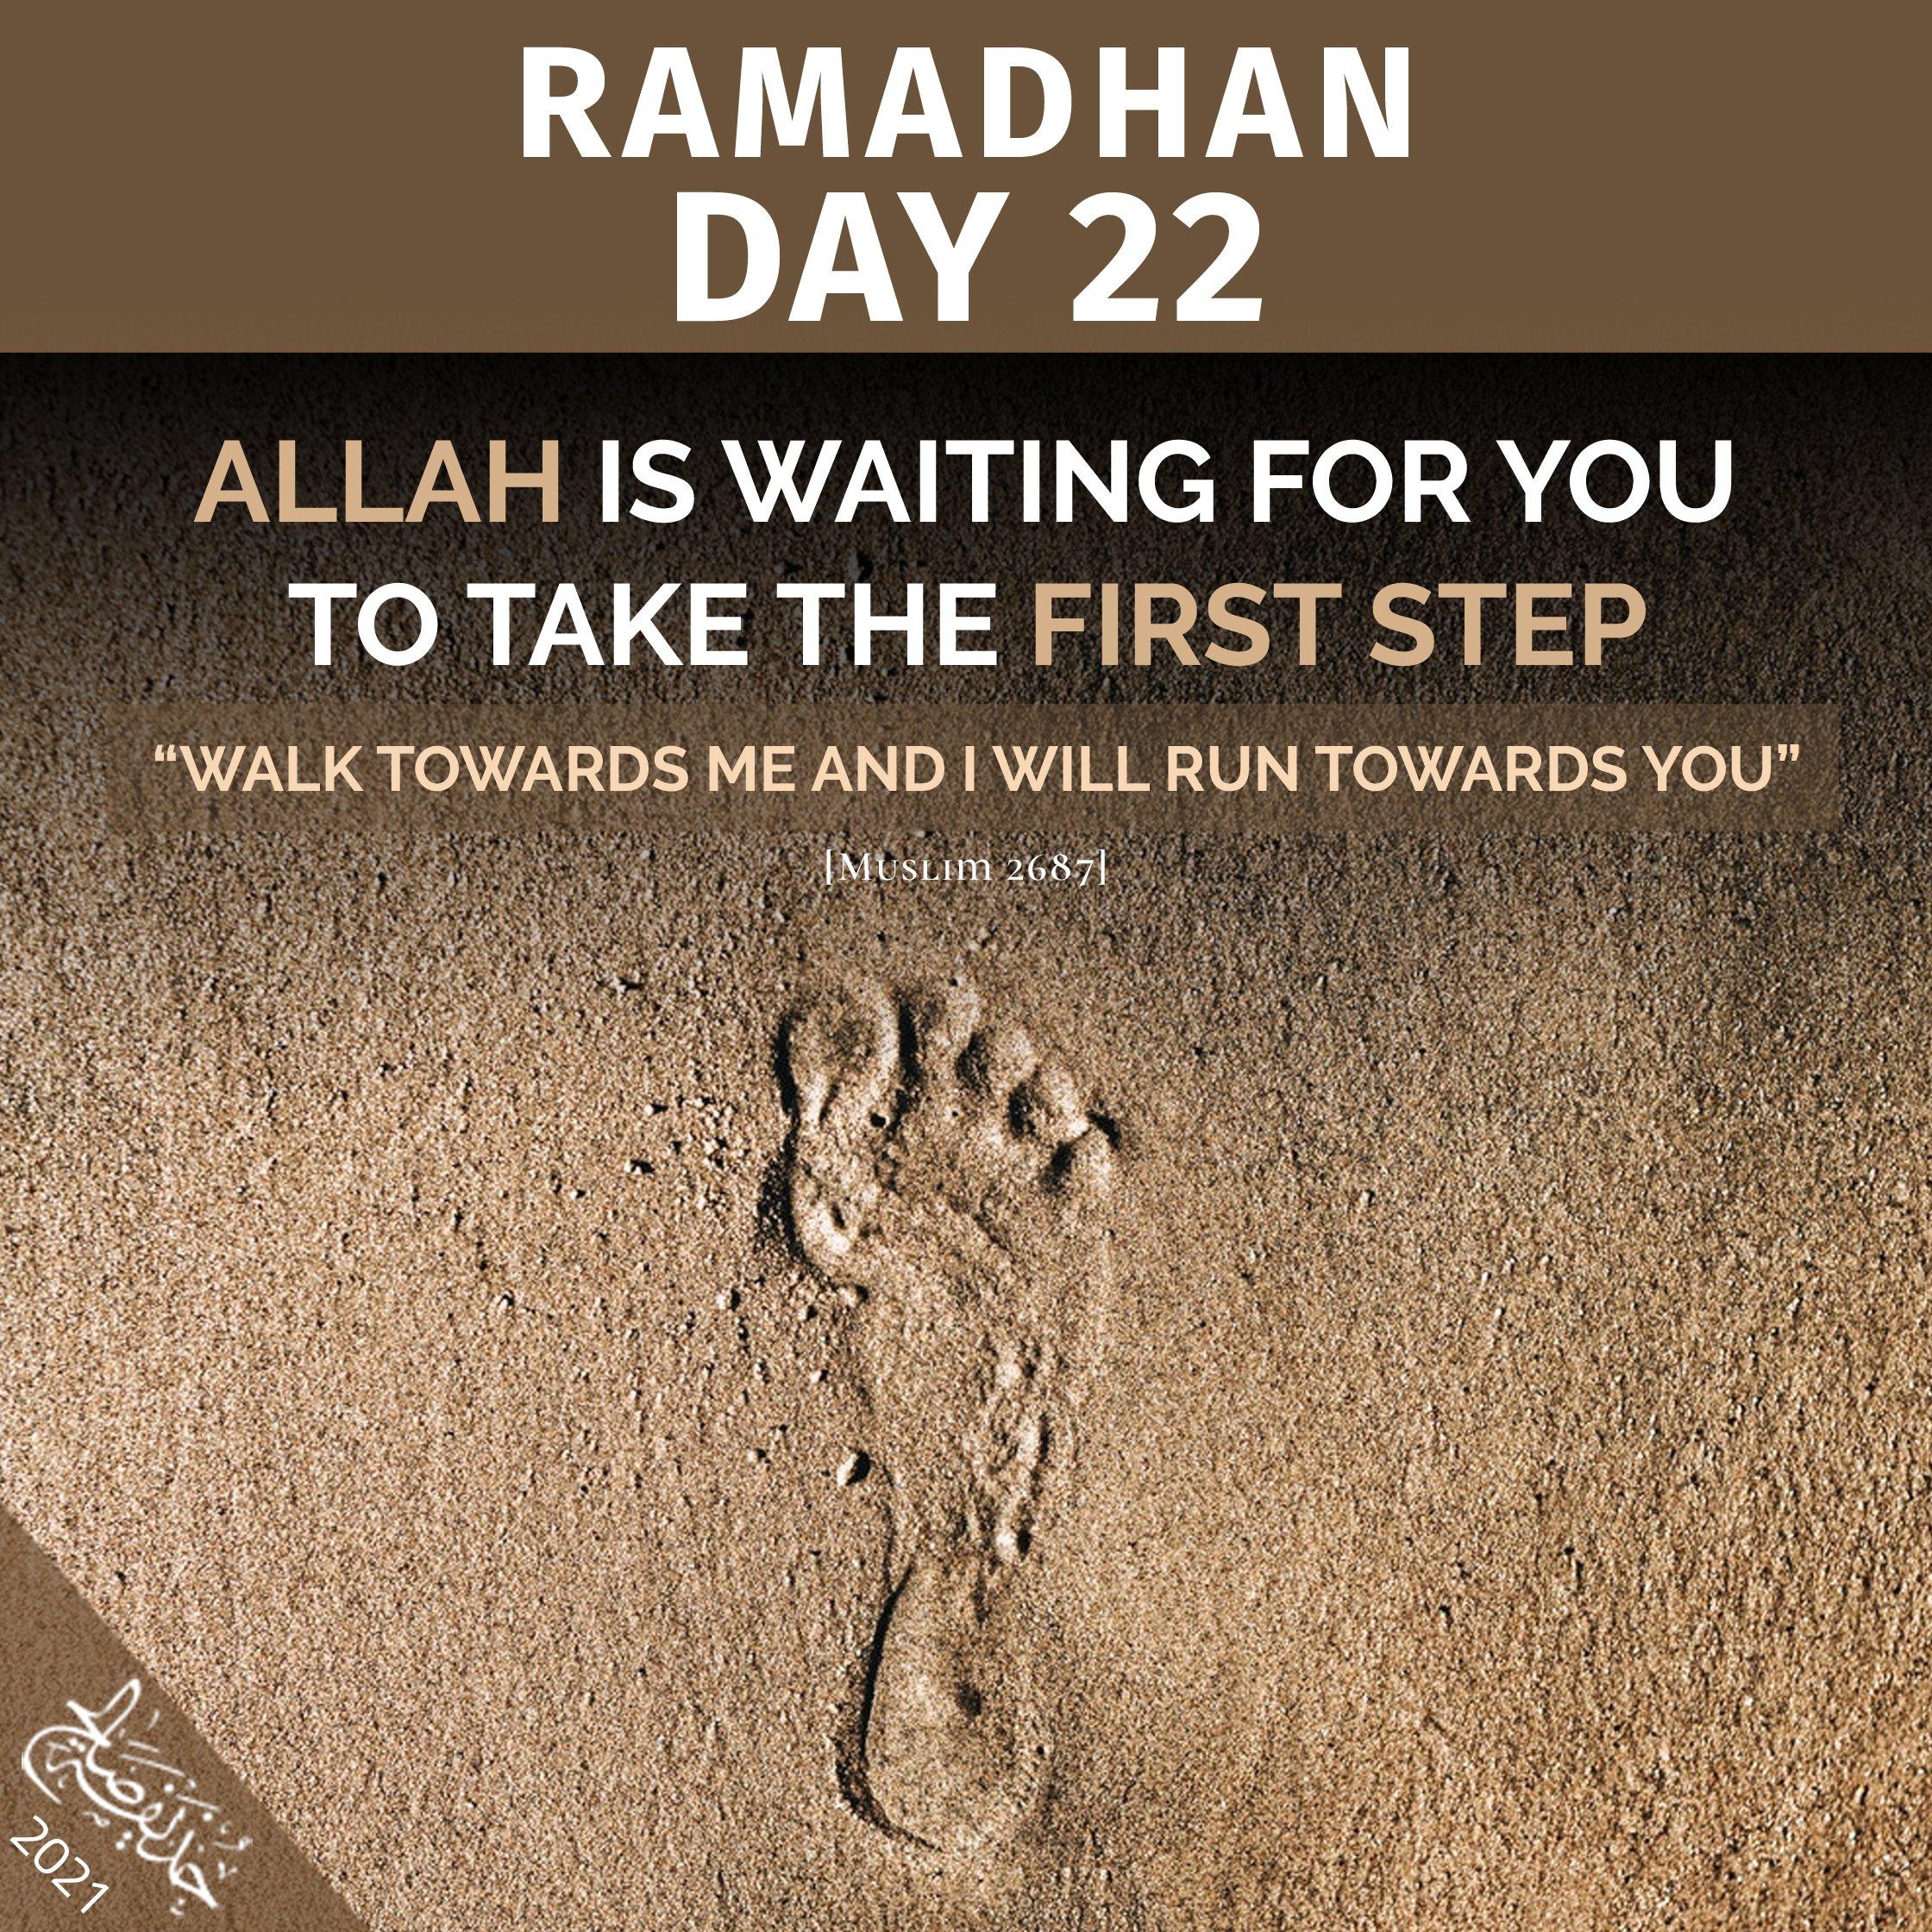 E0gf7lNX0AAmI7Aformatjpgname4096x4096 1 - Daily Ramadhan Reminders (2021)